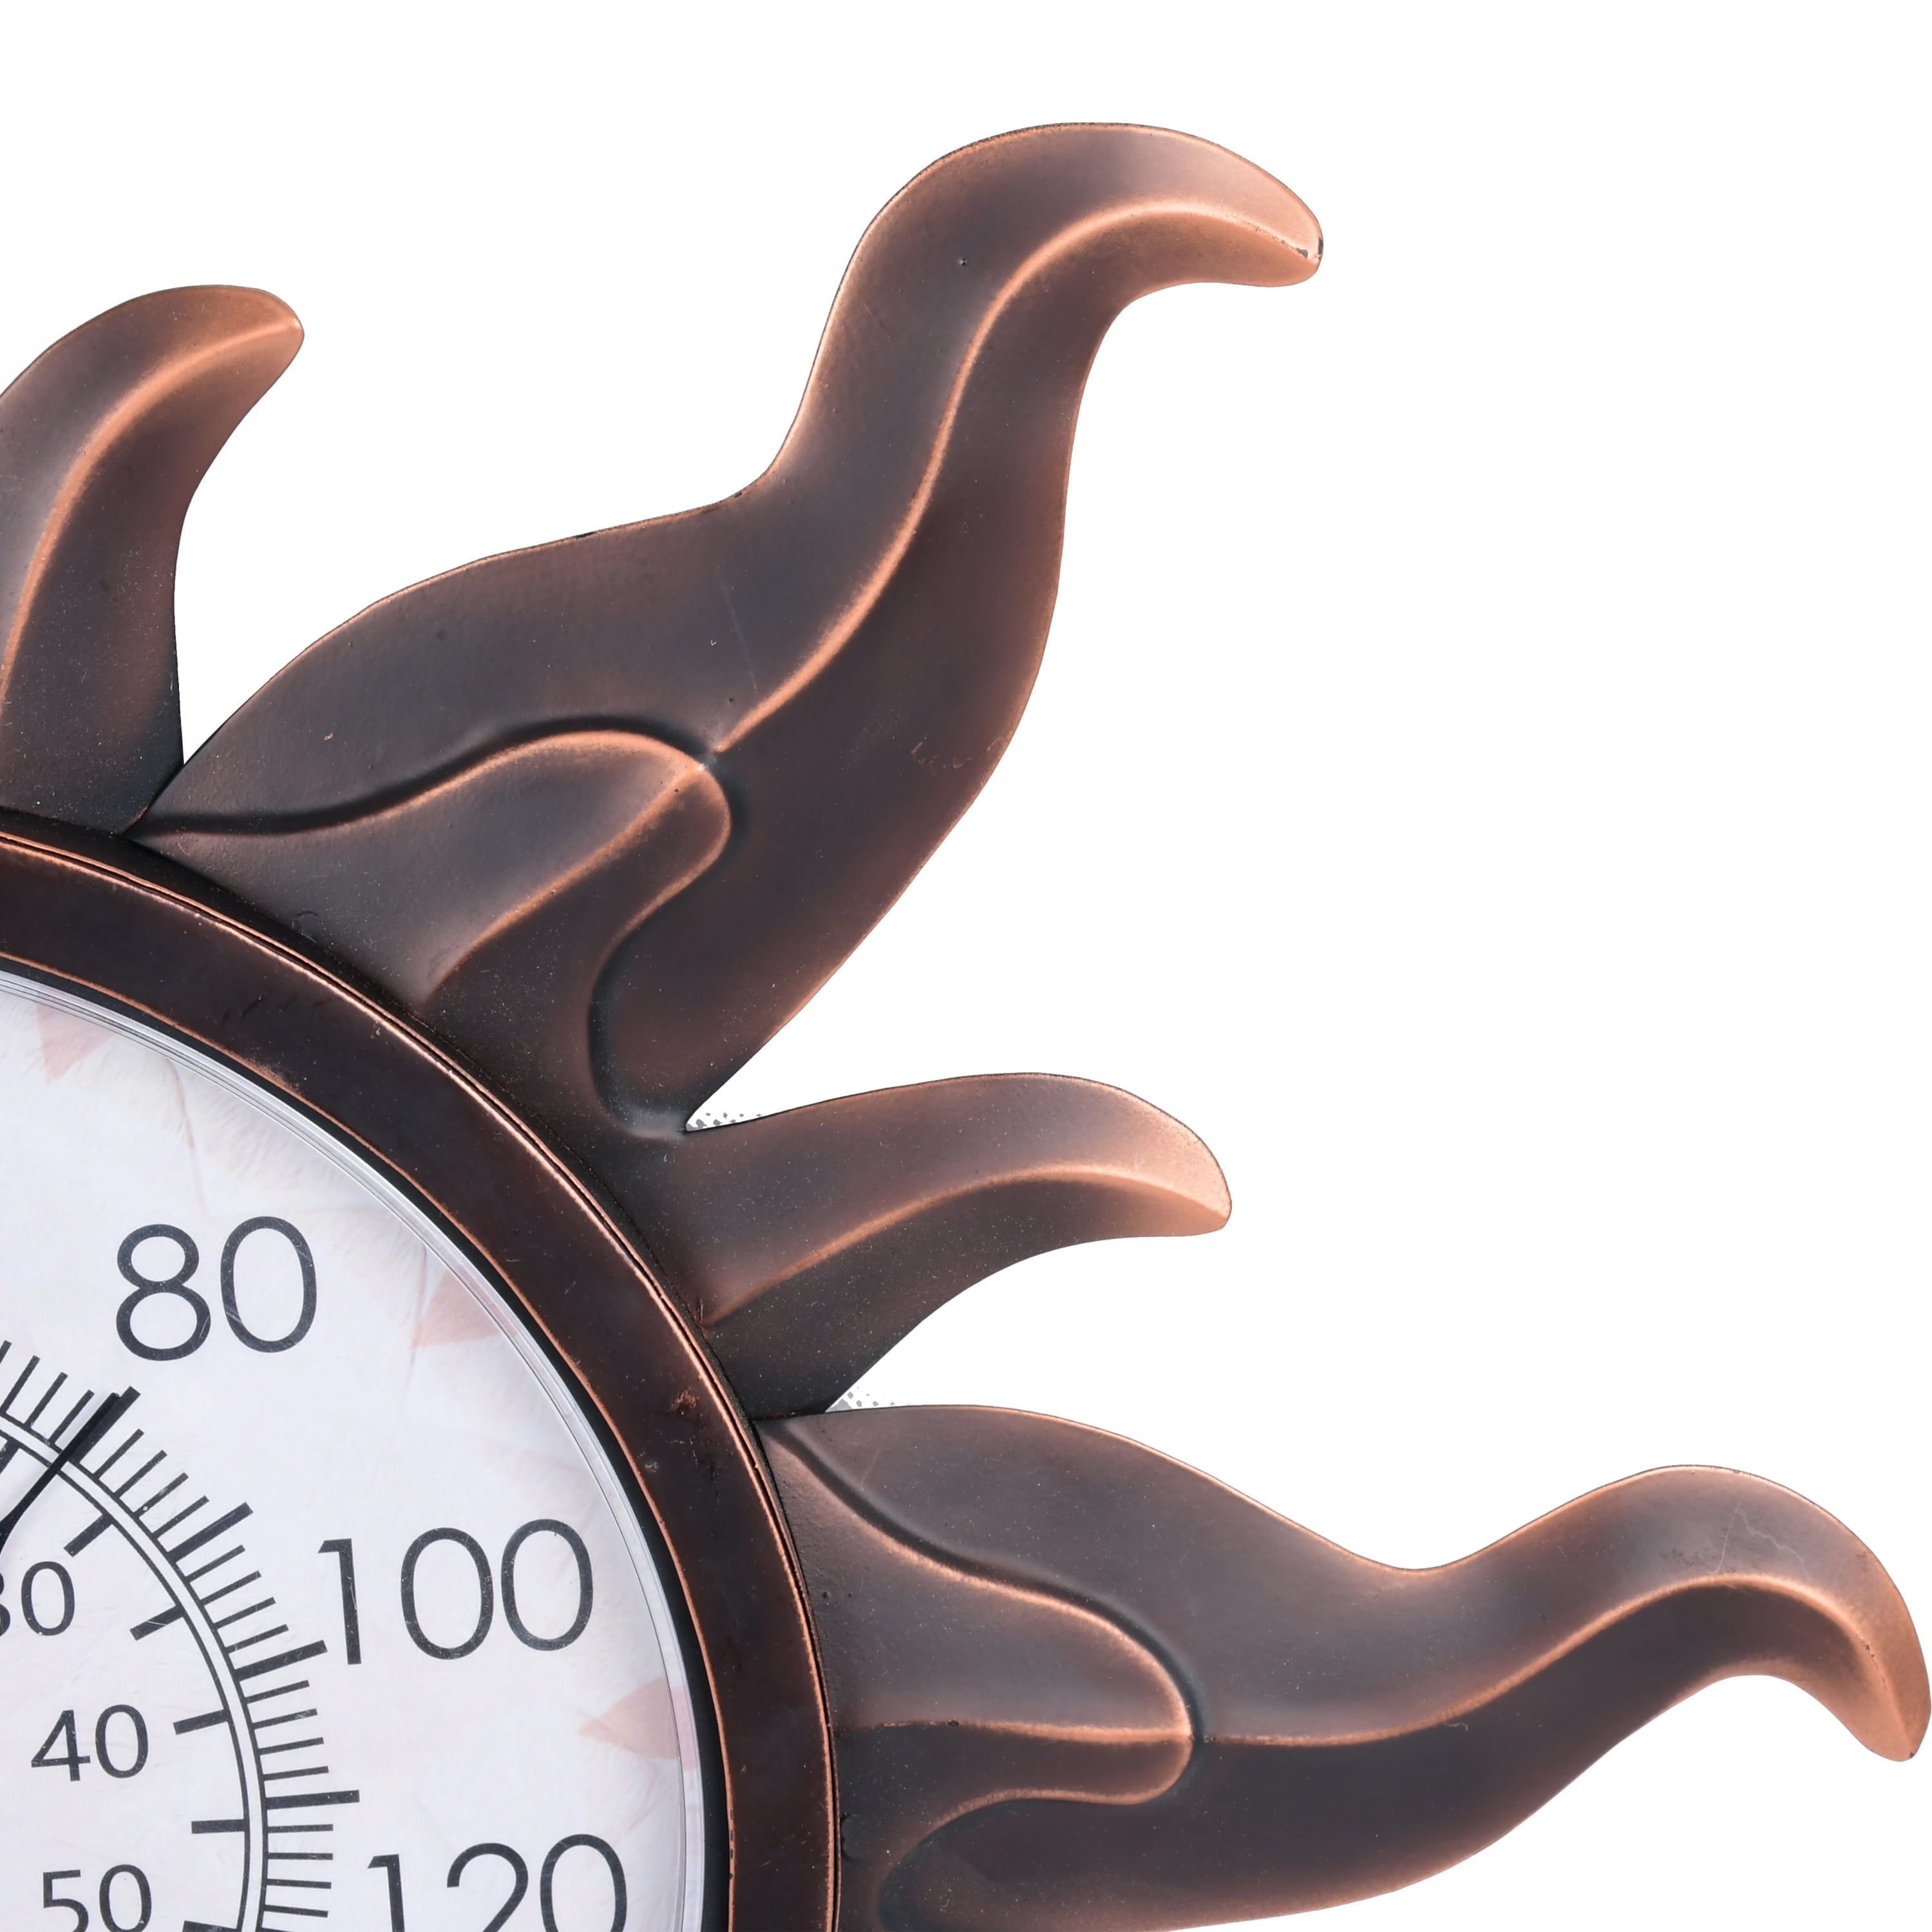 Indoor/Outdoor Metal Sun Clock with Temperature and Humidity